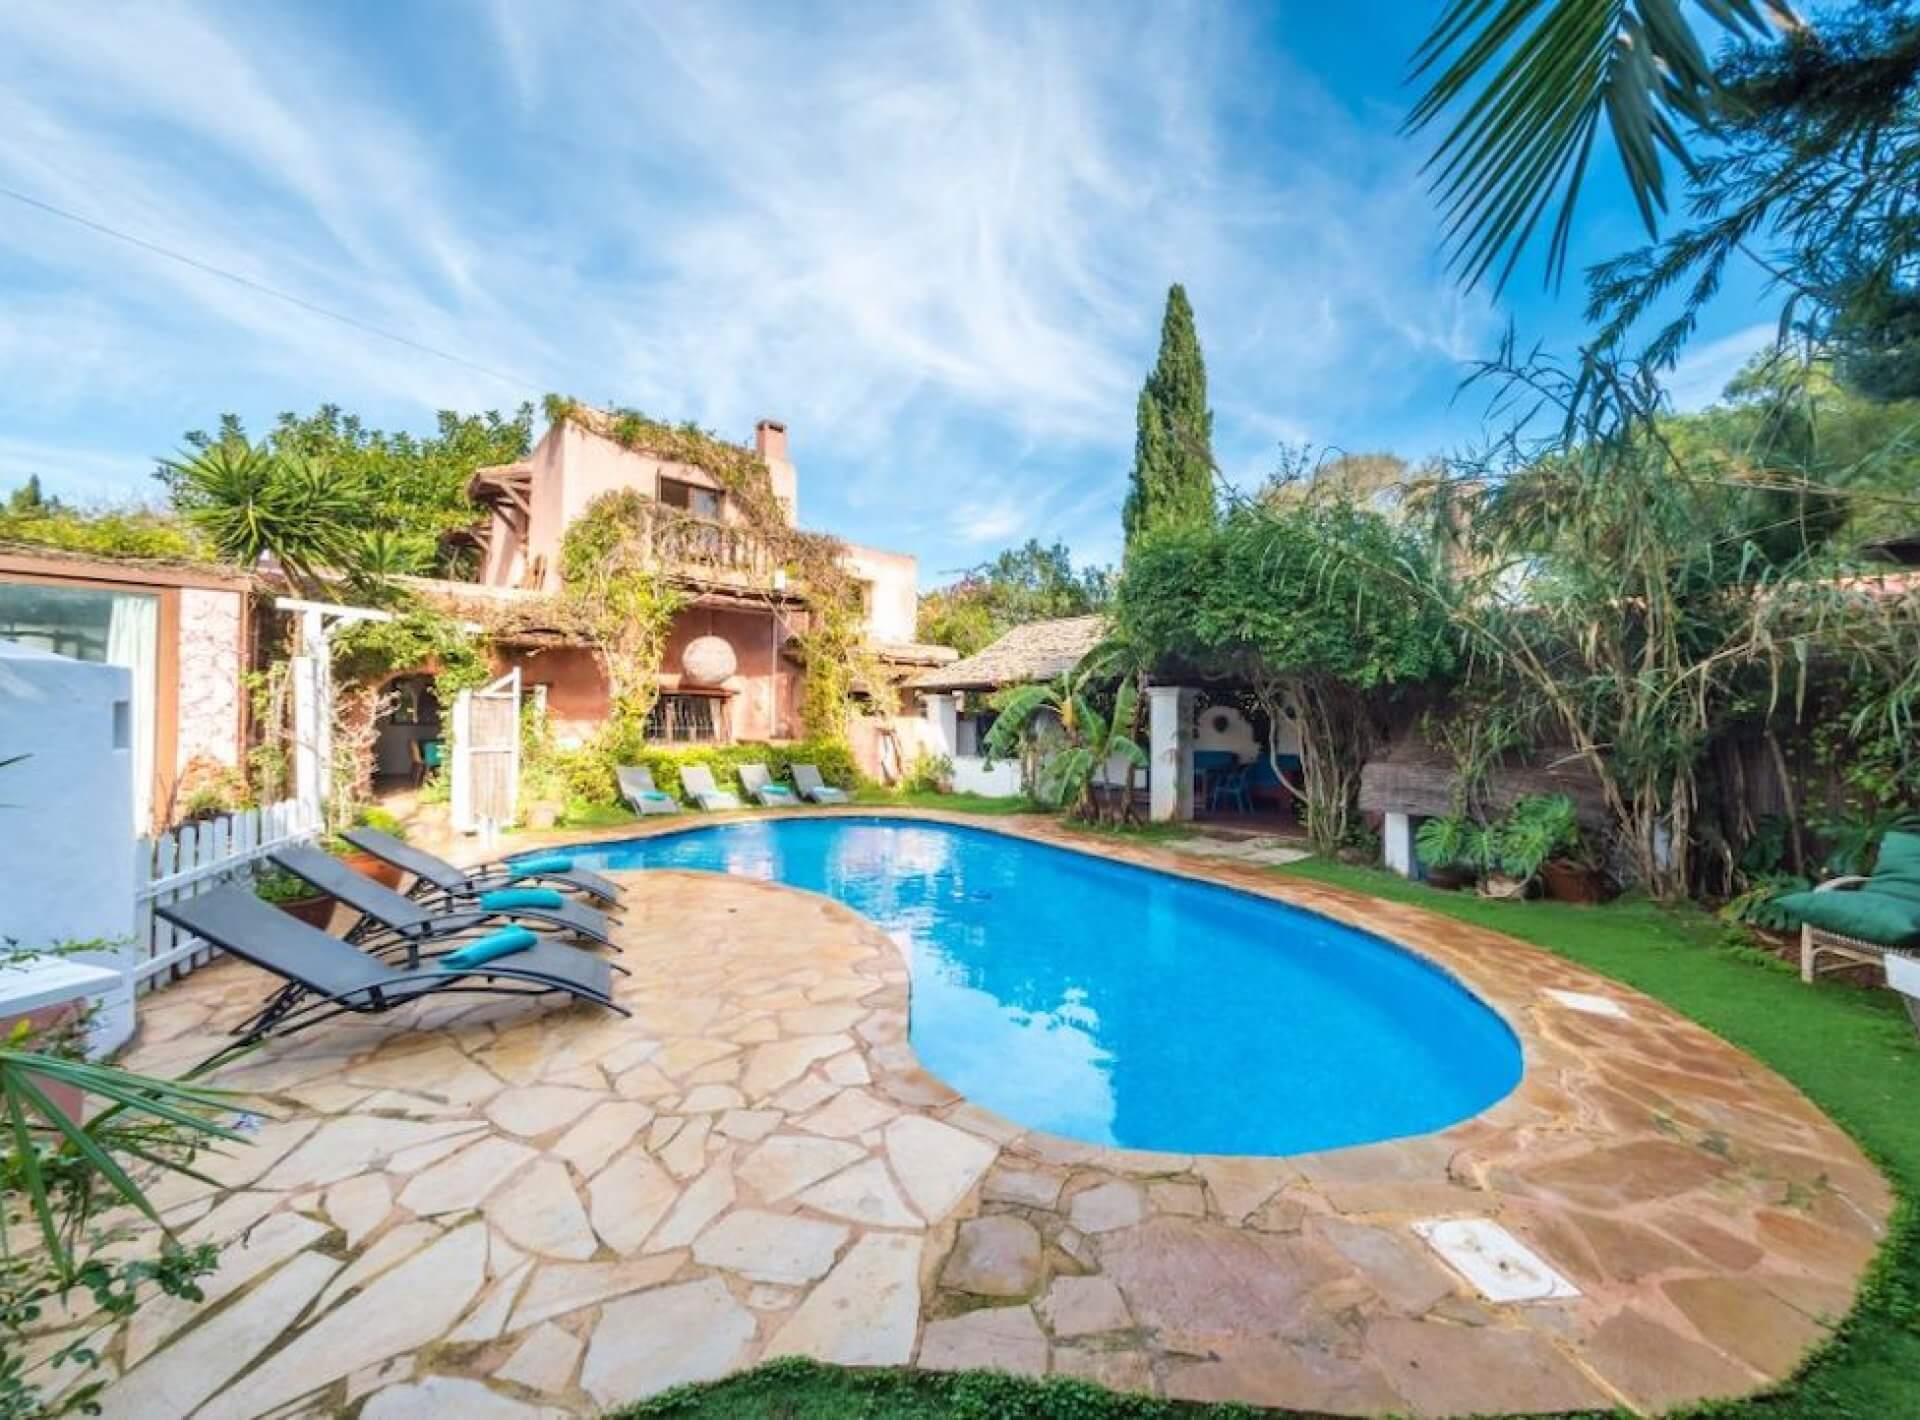 Villa Eden, piscina relax, chilout.